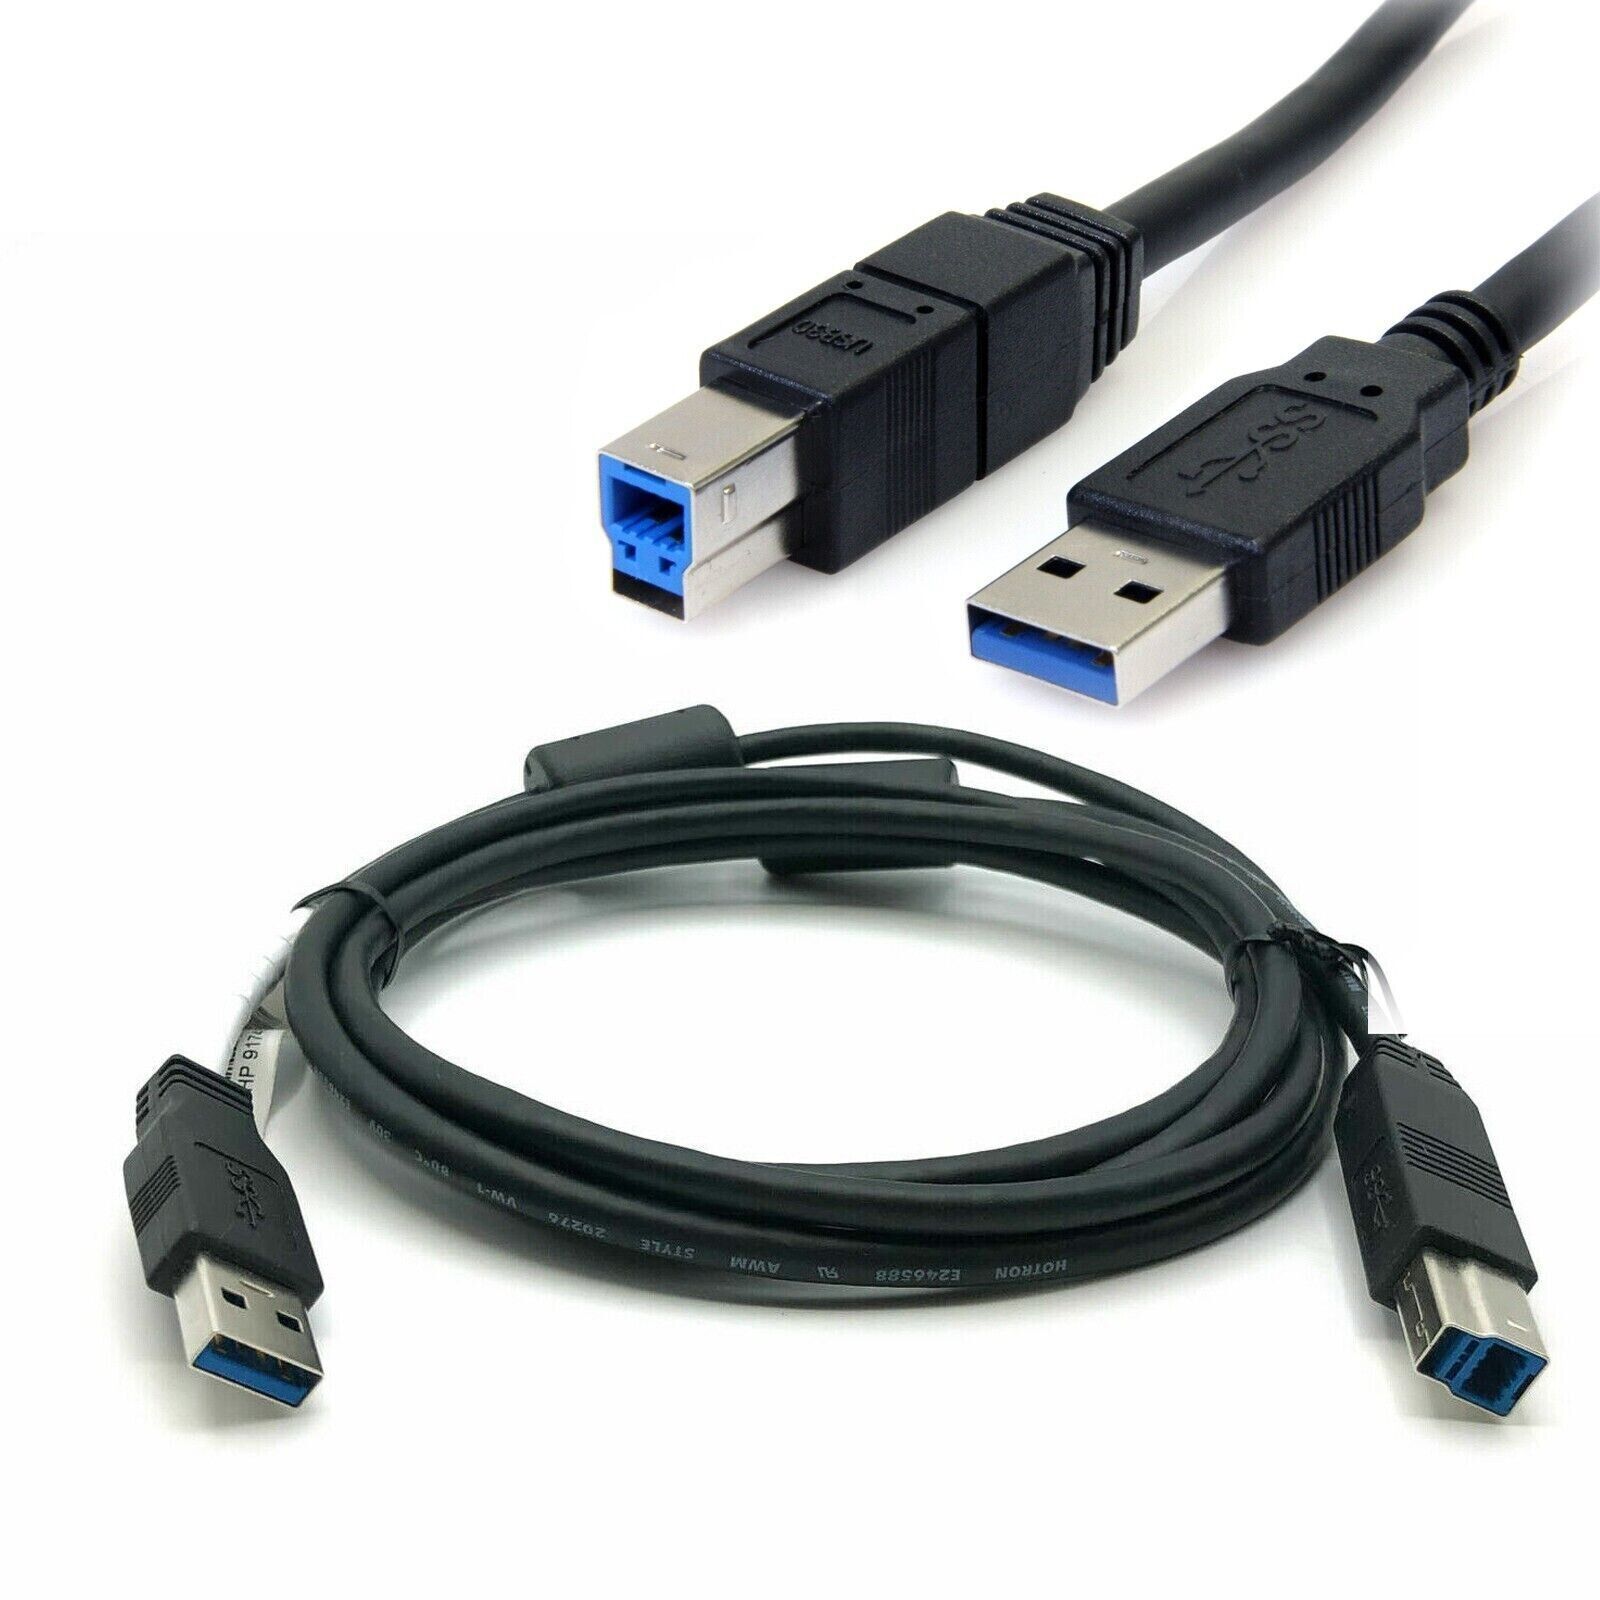 NEW USB 3.0 6 ft Cable for Panasonic KV-S1057C KV-S2087 & ToughFeed KV-S5076H